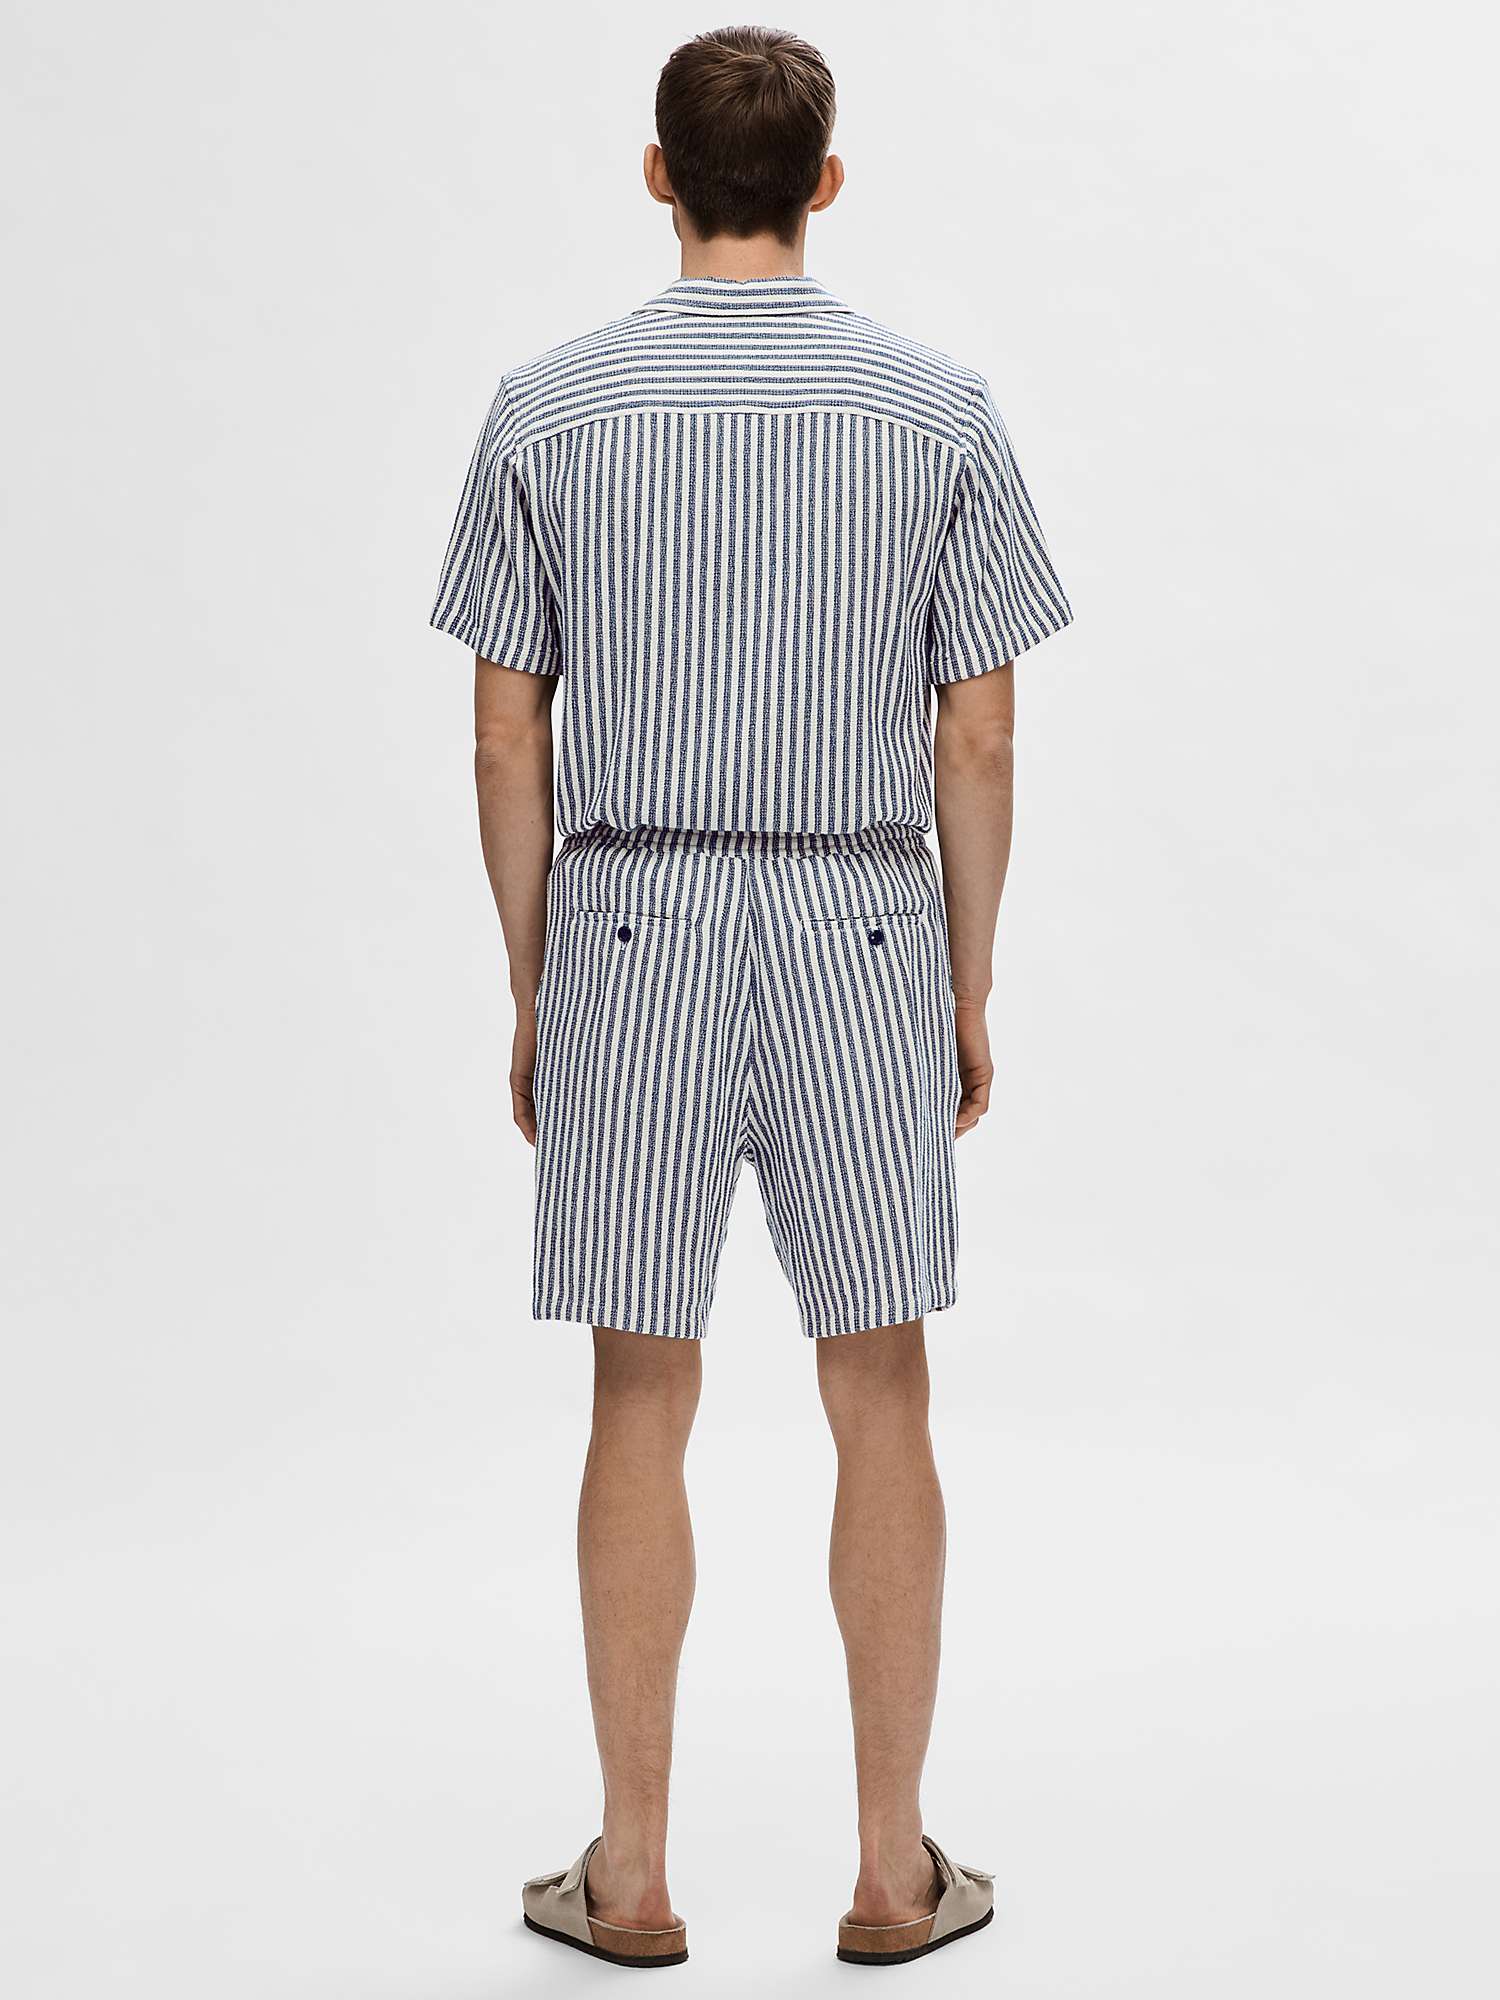 Buy SELECTED HOMME Stripe Shorts, Dark Sapphire Online at johnlewis.com